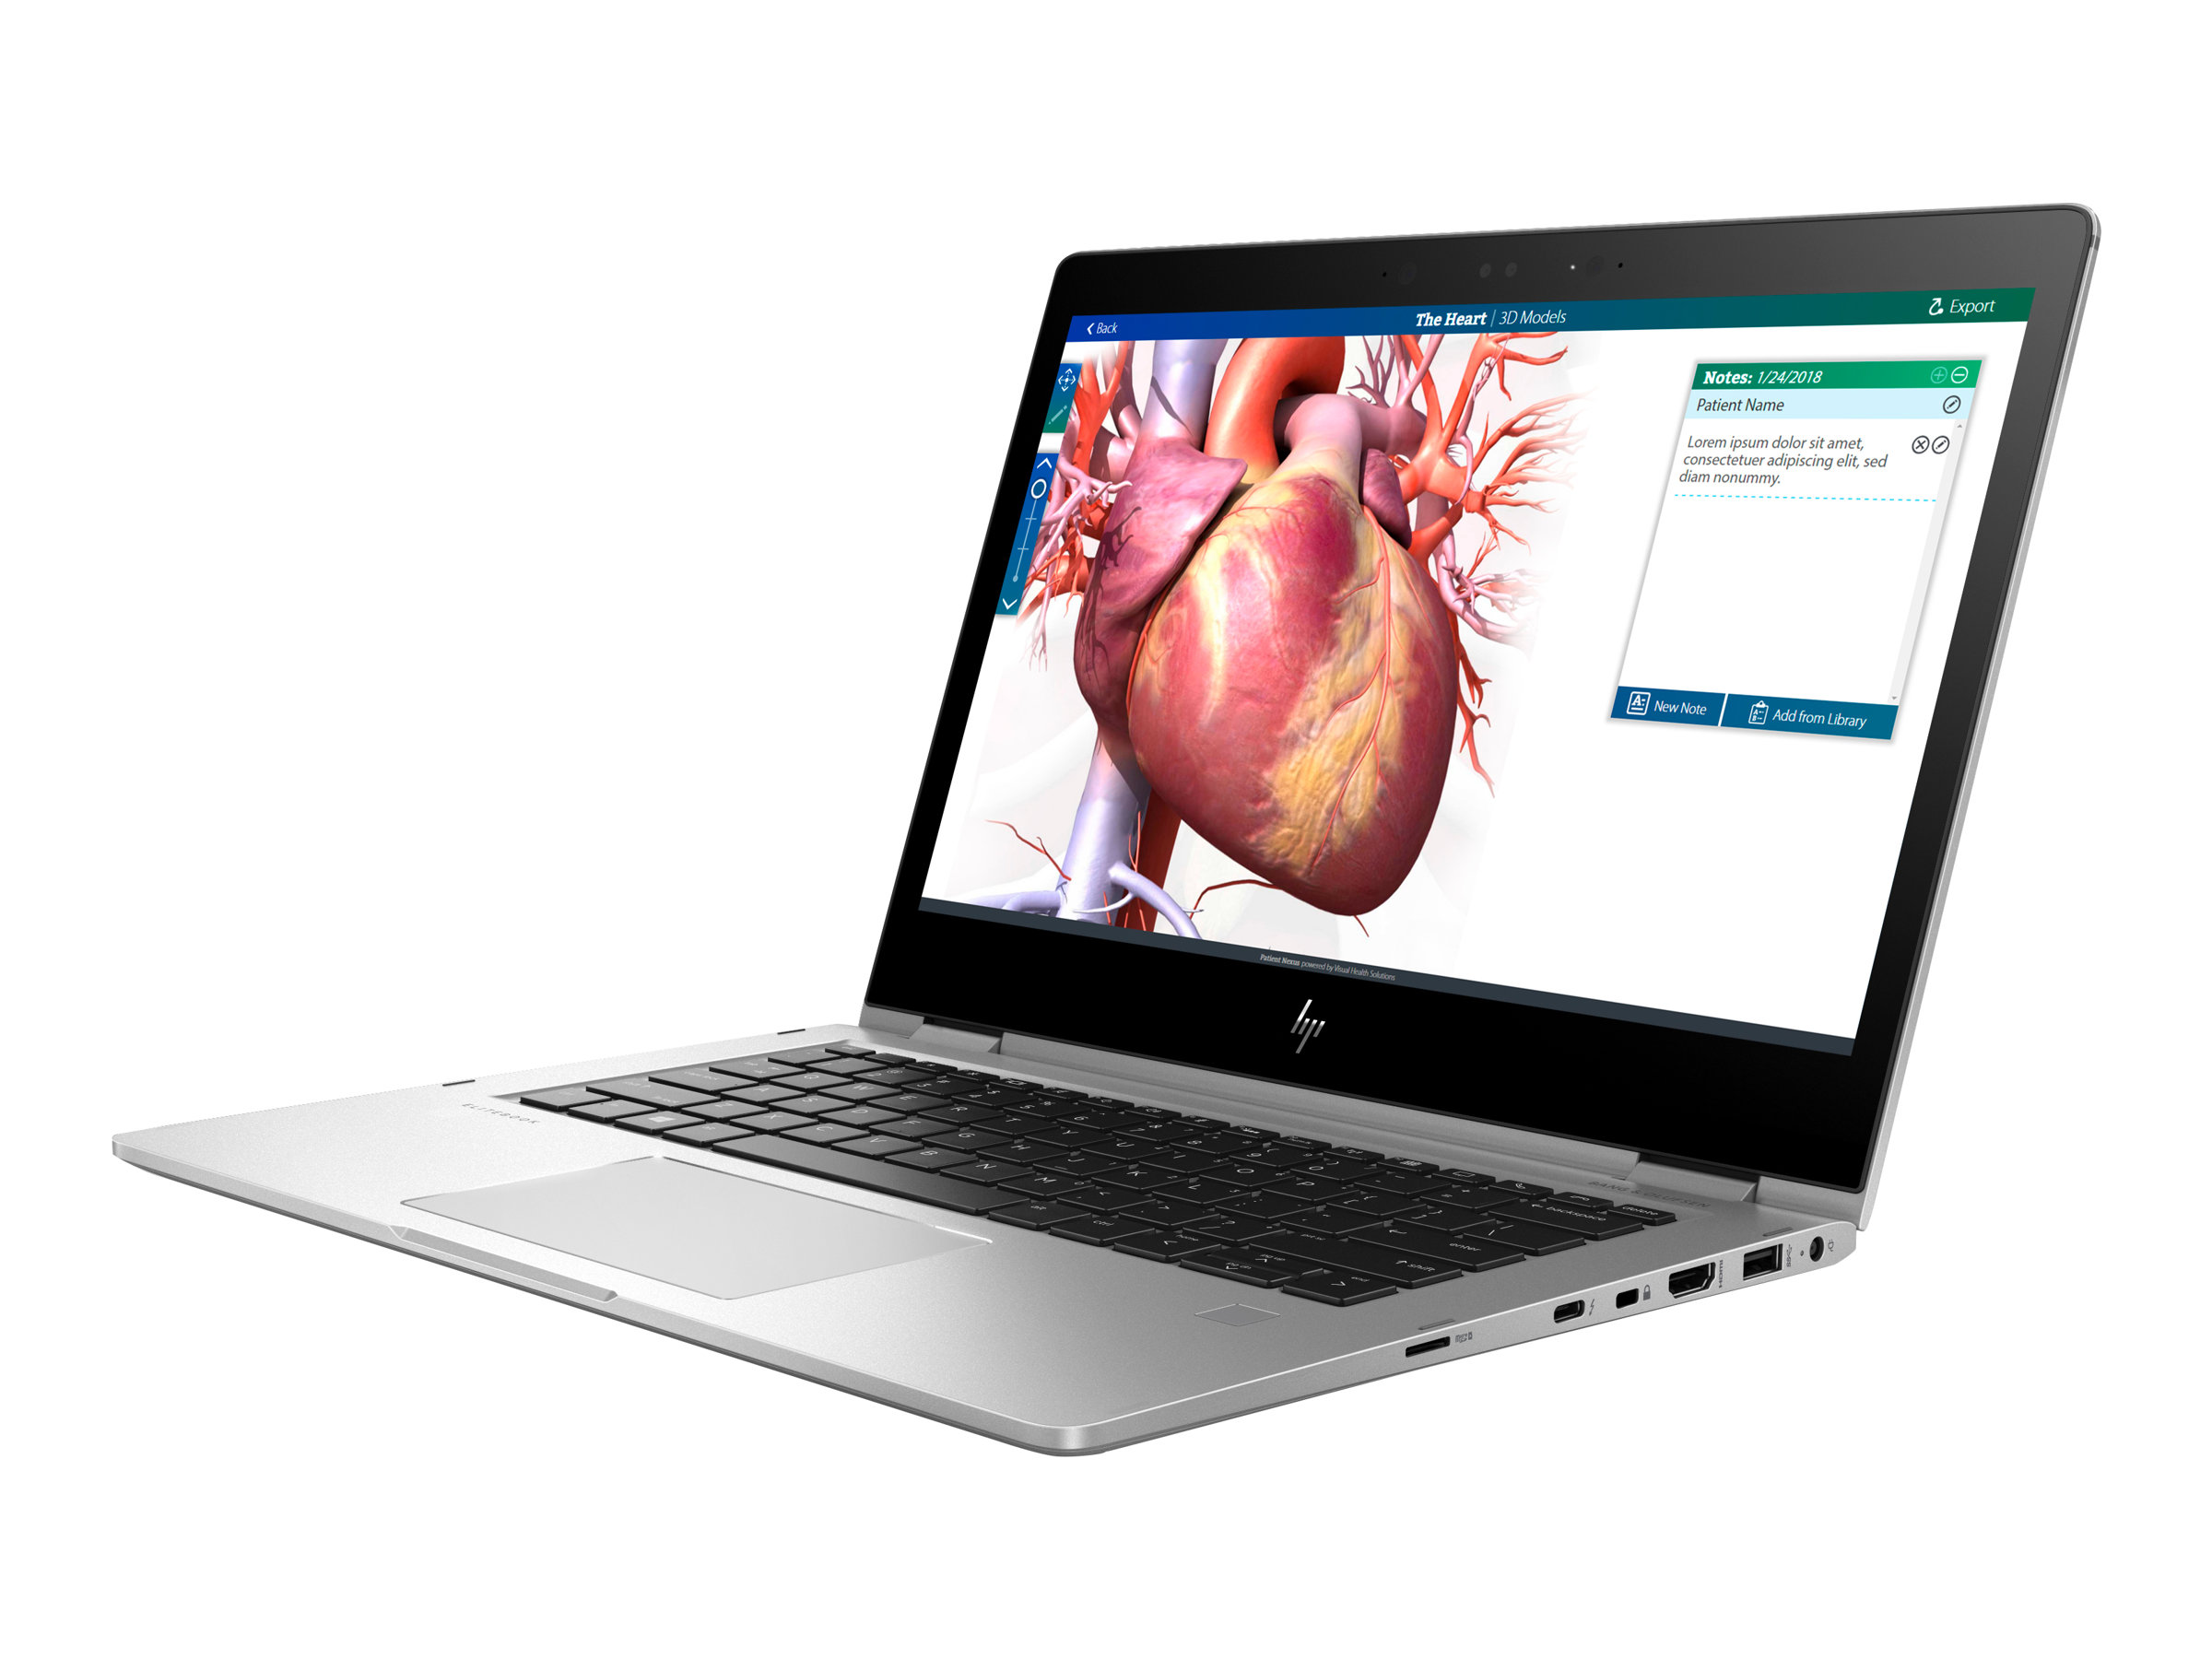 HP EliteBook x360 1030 G2 Notebook - Flip-Design - Intel Core i5 7200U / 2.5 GHz - Win 10 Home 64-Bit - HD Graphics 620 - 8 GB RAM